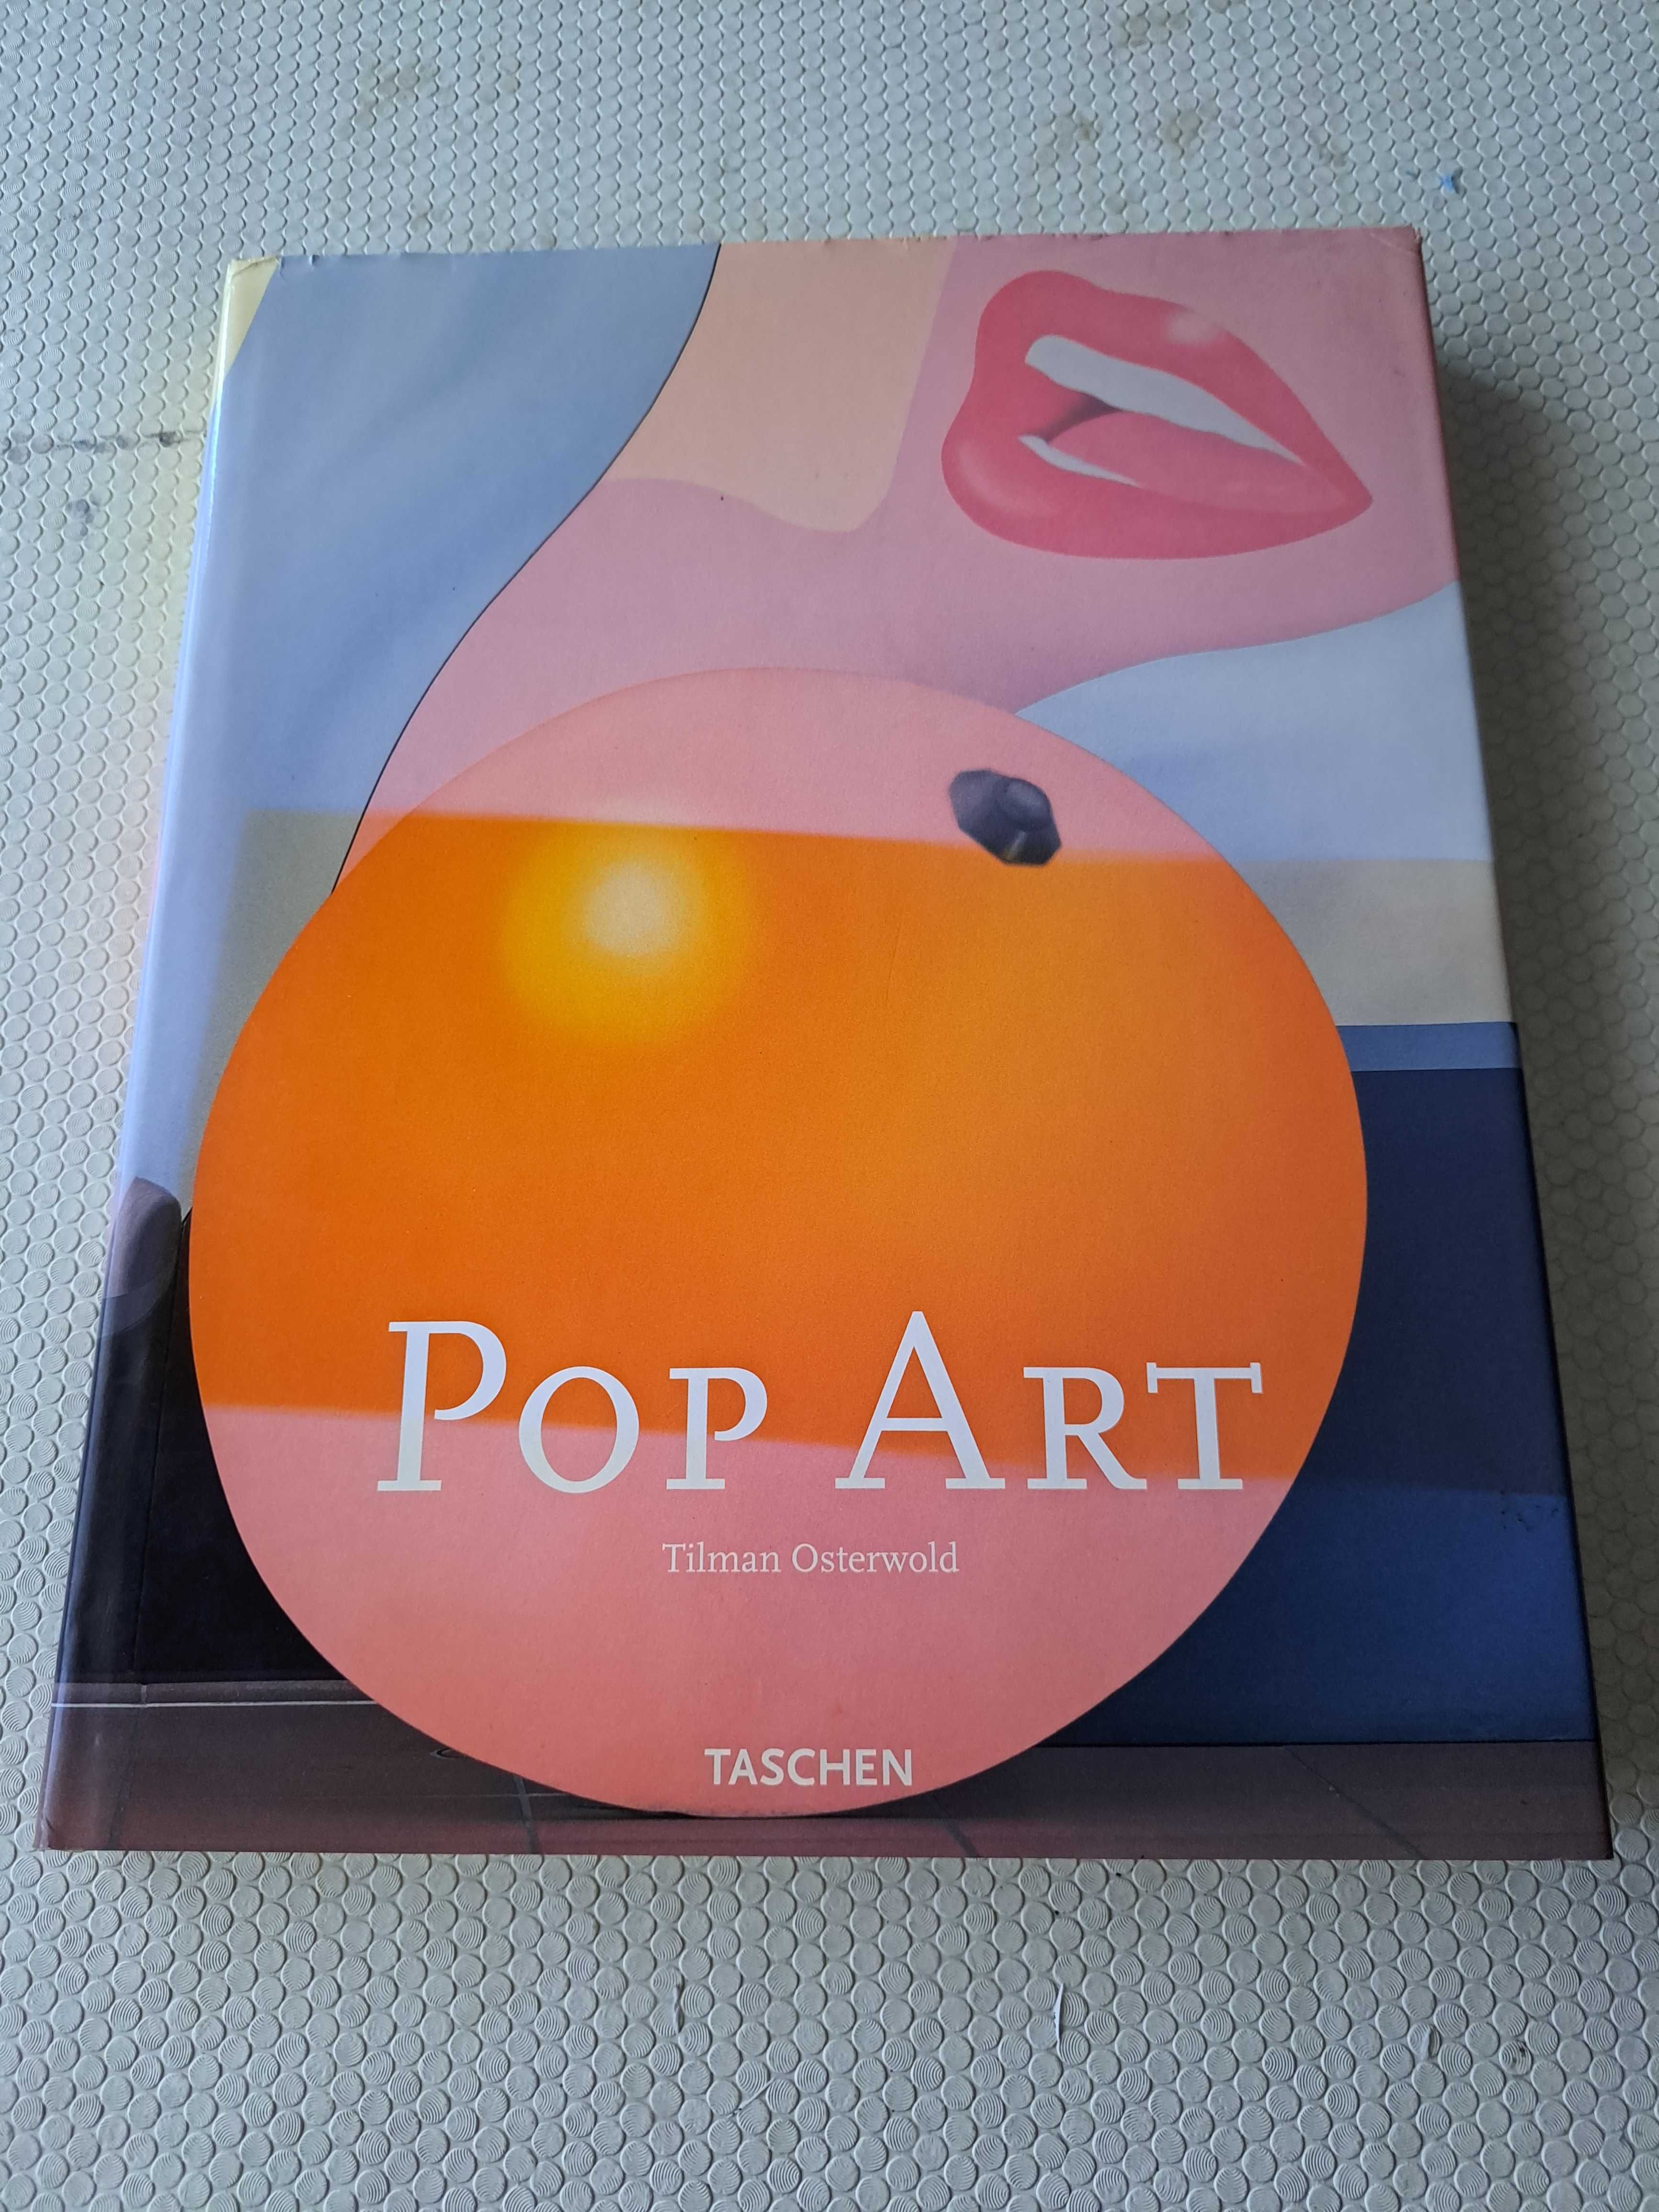 Pop Art - Tilman Osterwold - TASCHEN